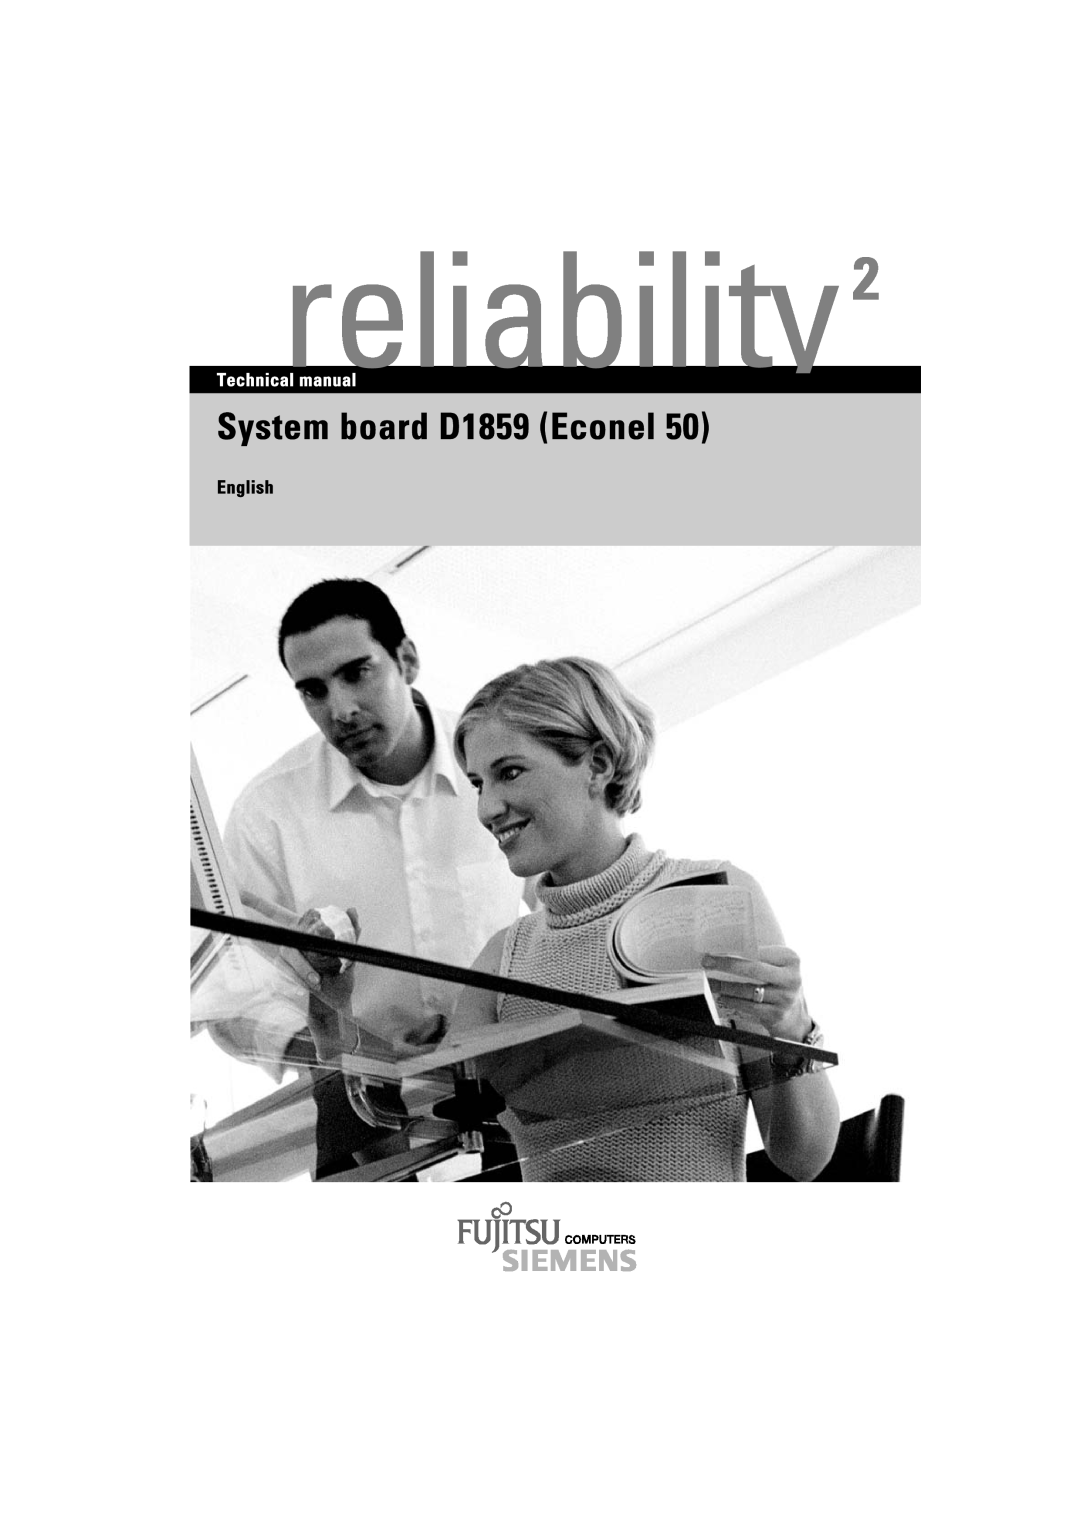 Fujitsu technical manual English, reliability2, System board D1859 Econel, Technical manual 